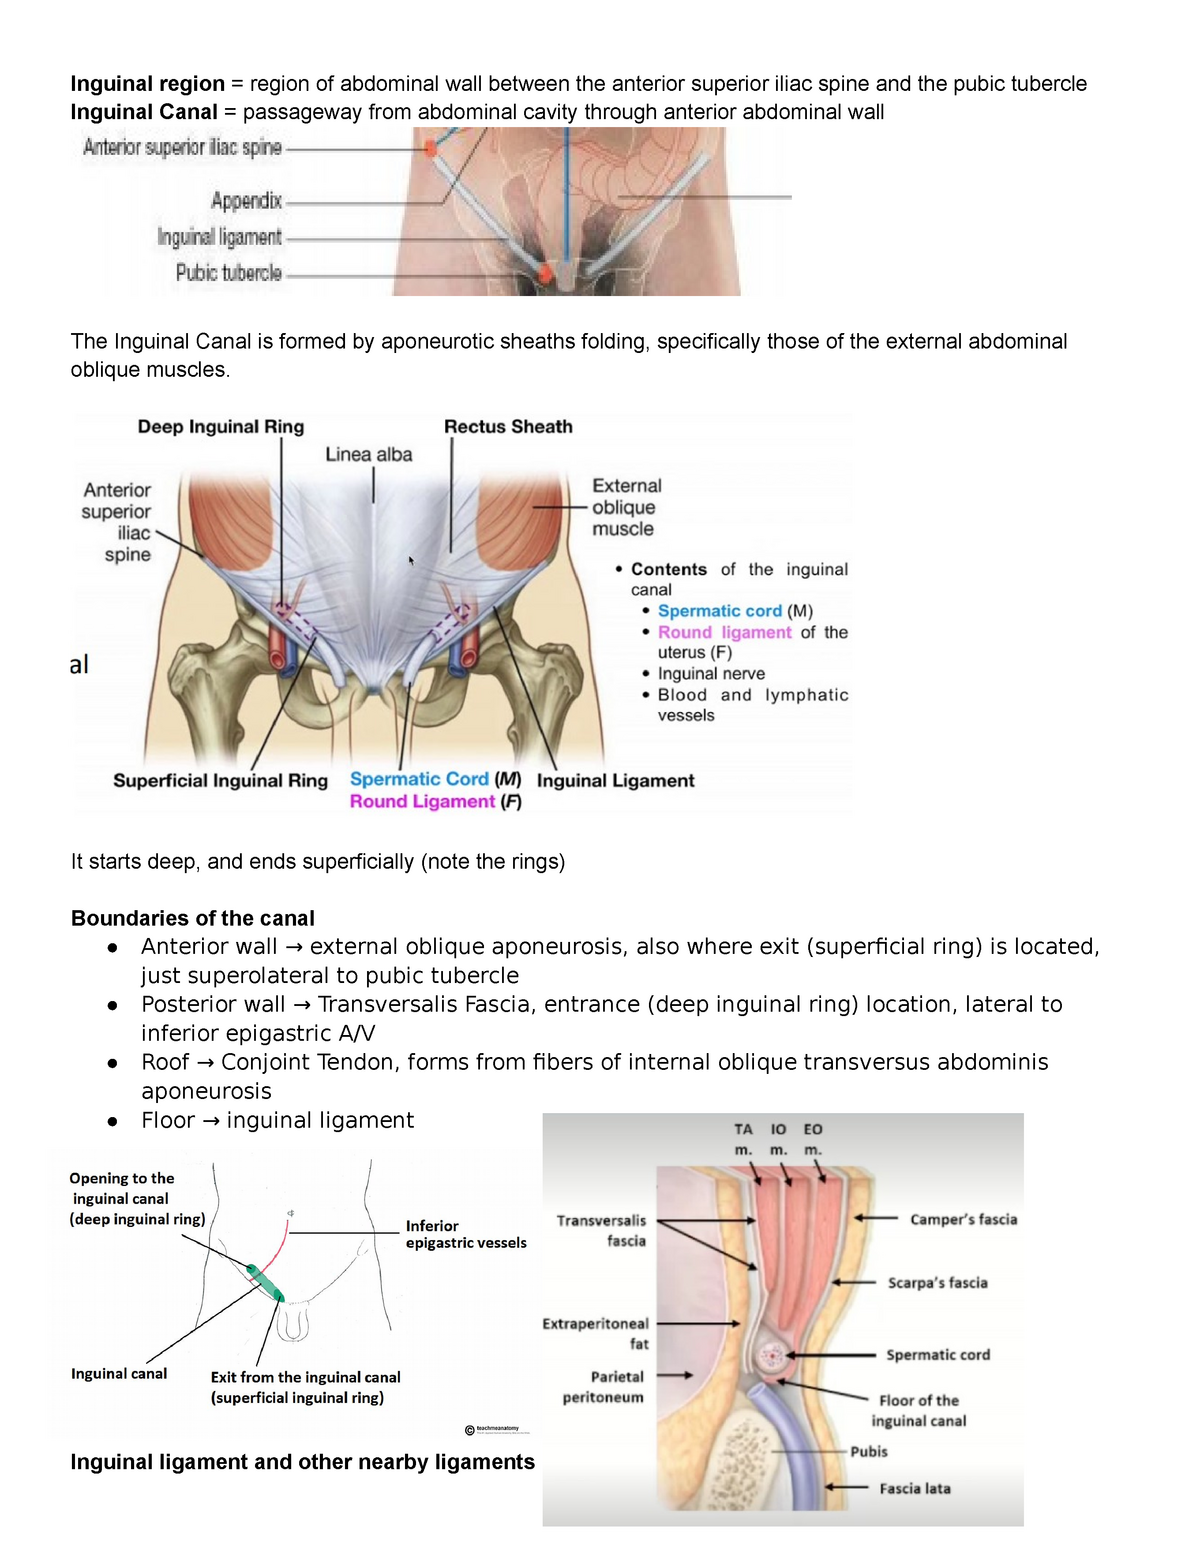 Inguinal hernias | OSCEstop | OSCE Learning